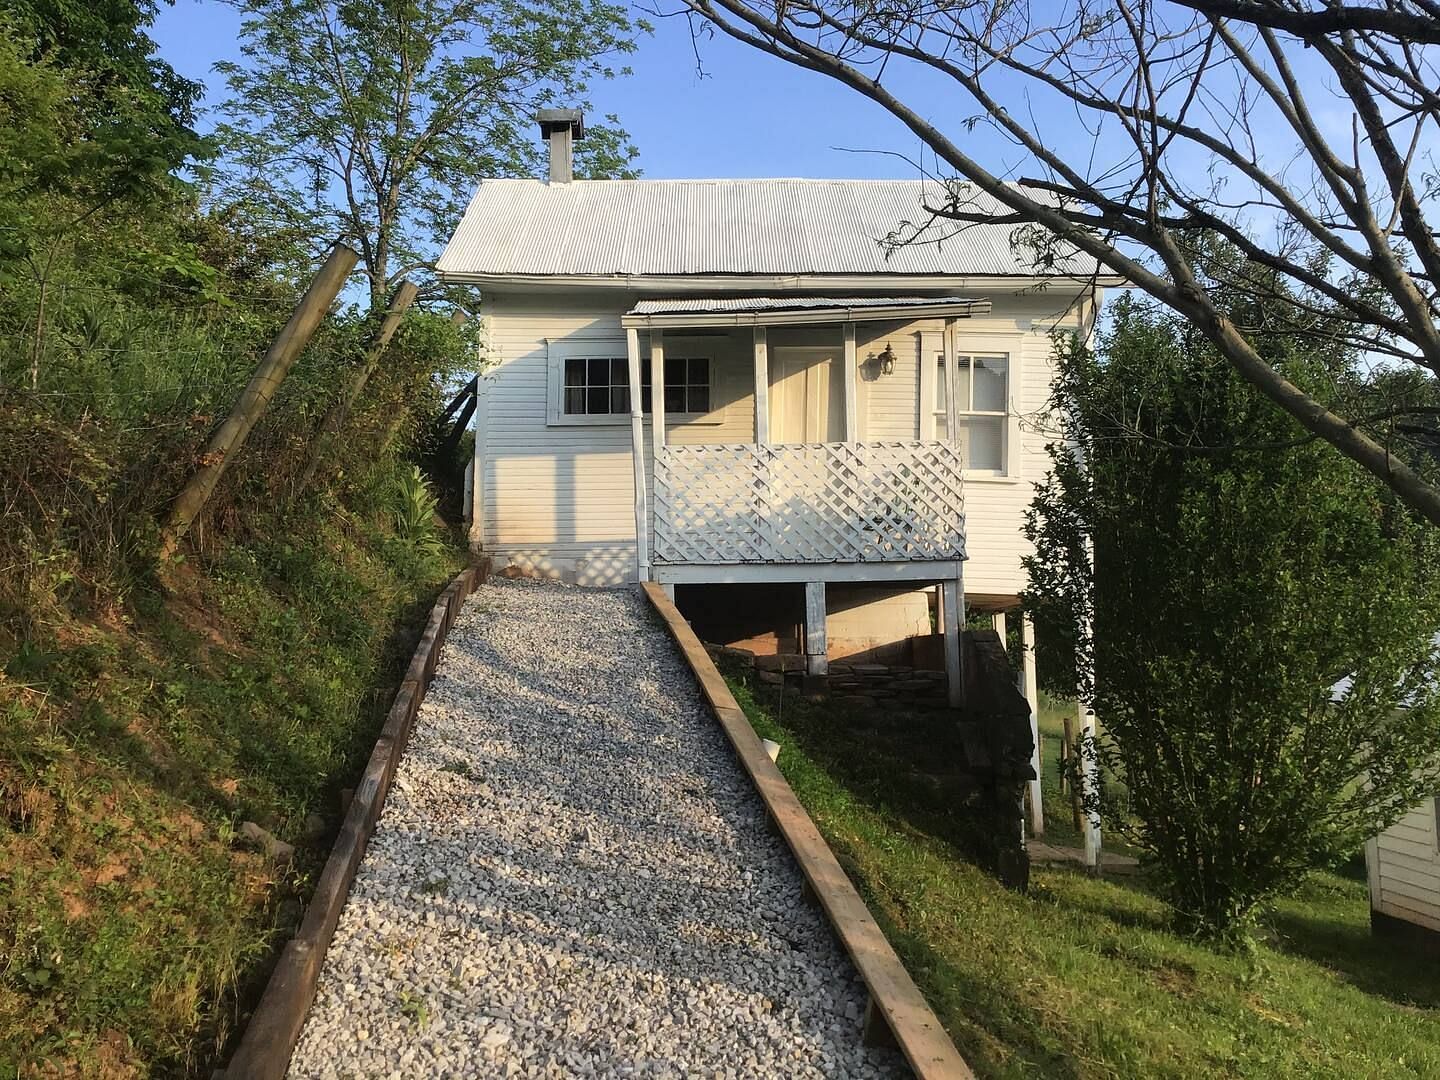 JWguest Rental unit at LeRoy, West Virginia | The Farm - Cottage On The Hill | Jwbnb no brobnb 1